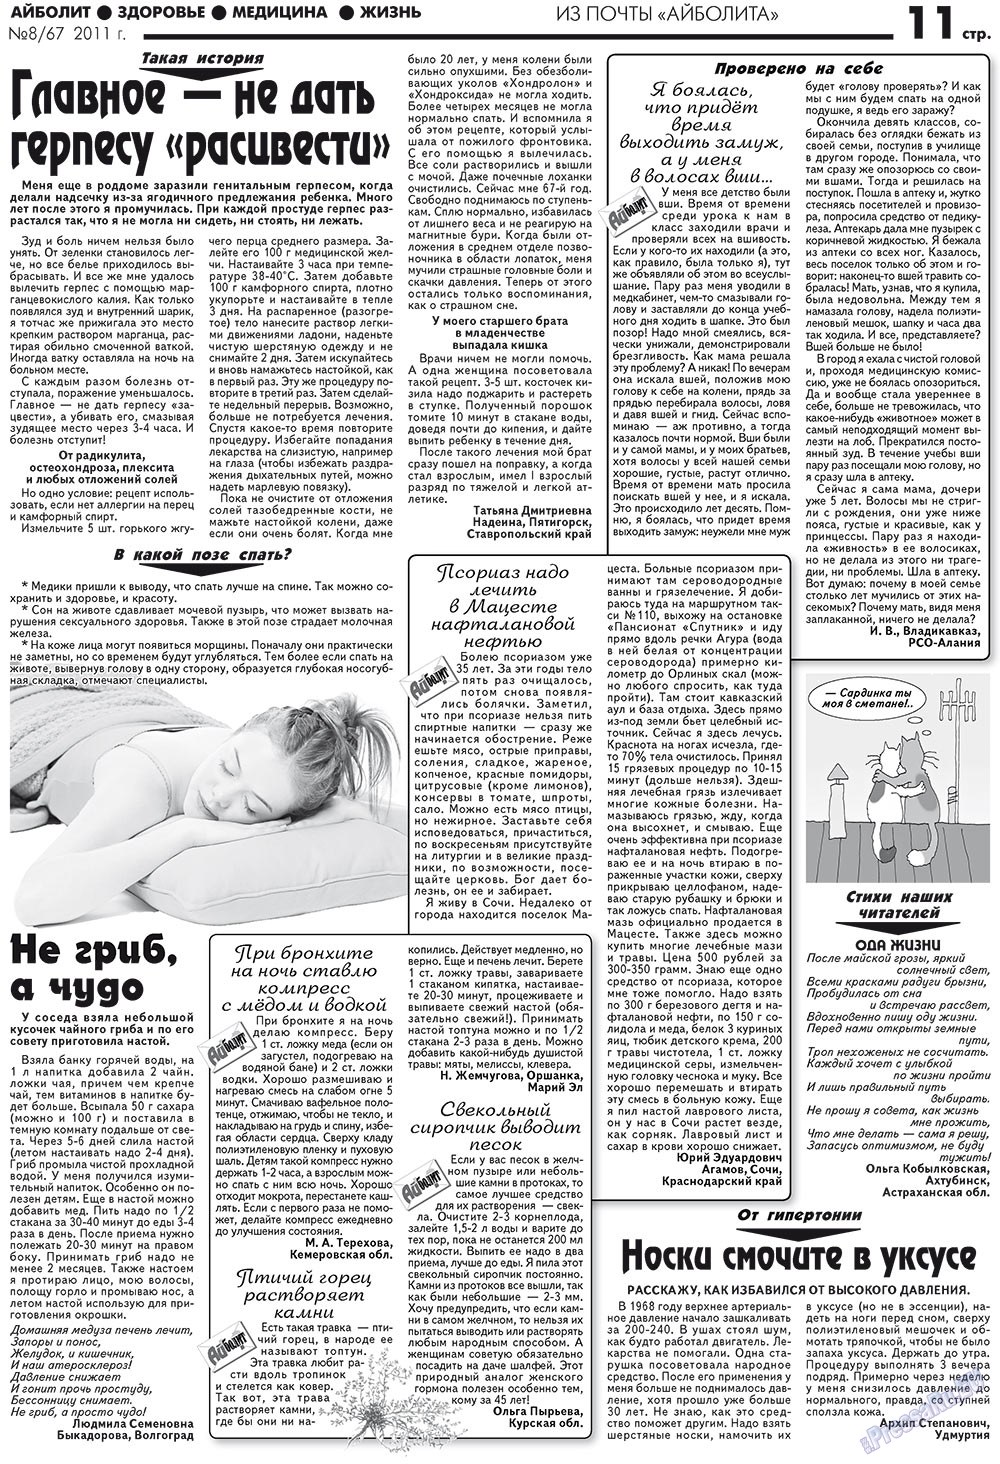 АйБолит (газета). 2011 год, номер 8, стр. 11